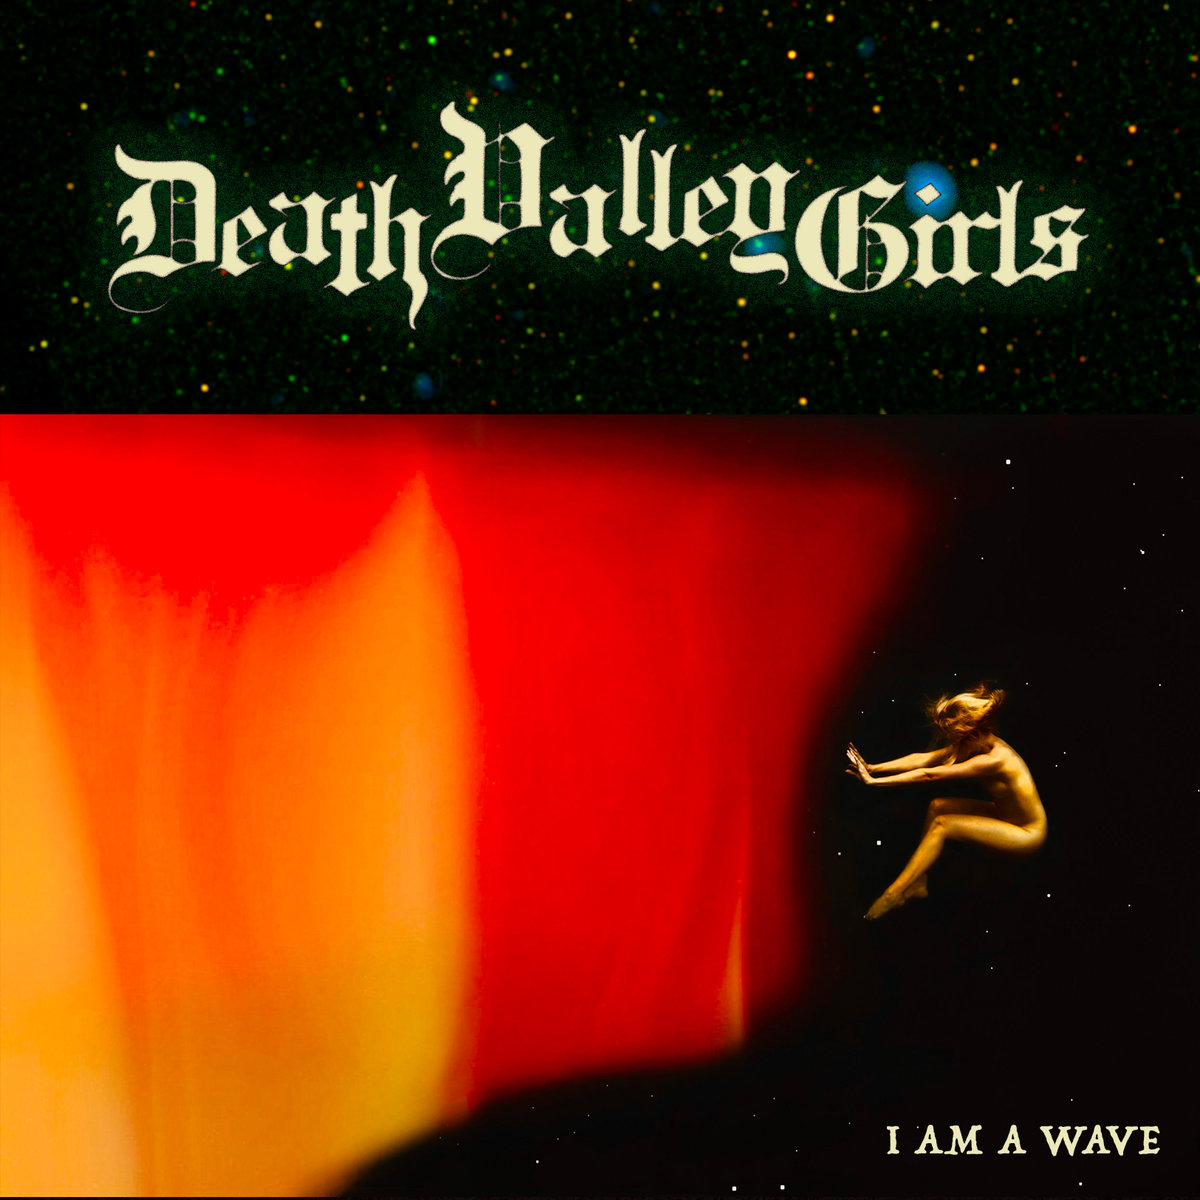 News – Death Valley Girls – I Am a Wave